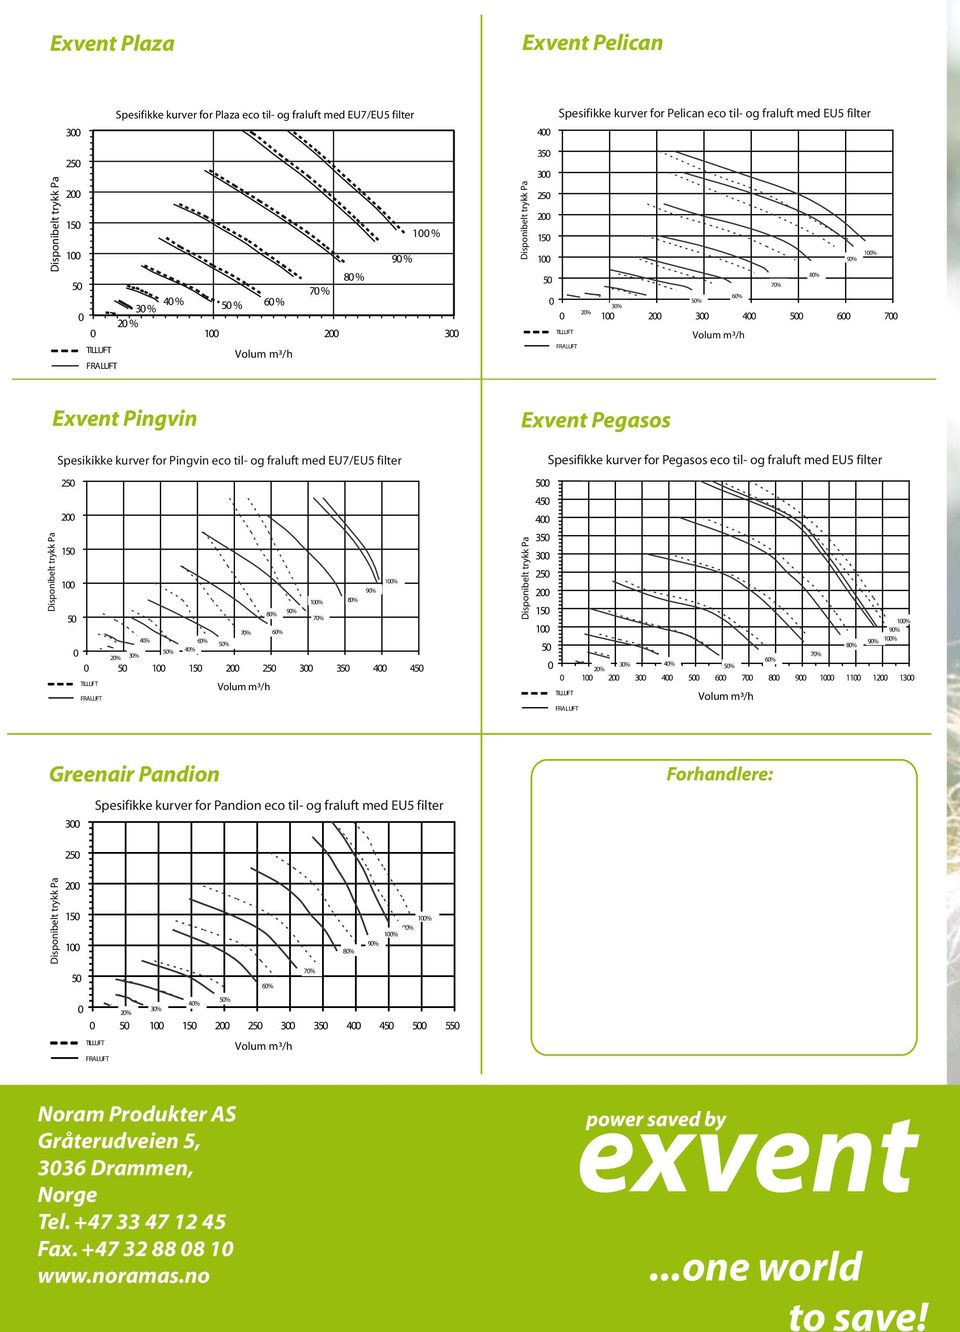 Pegasos 4 4 3 2 2 1 Spesifikke kurver for Pegasos eco til- og fraluft med EU5 filter 3% 4% 2% % 2 4 6 7 8 9 1 12 1 6% 7% 8% % 9% 9% % Greenair Pandion Spesifikke kurver for Pandion eco til- og